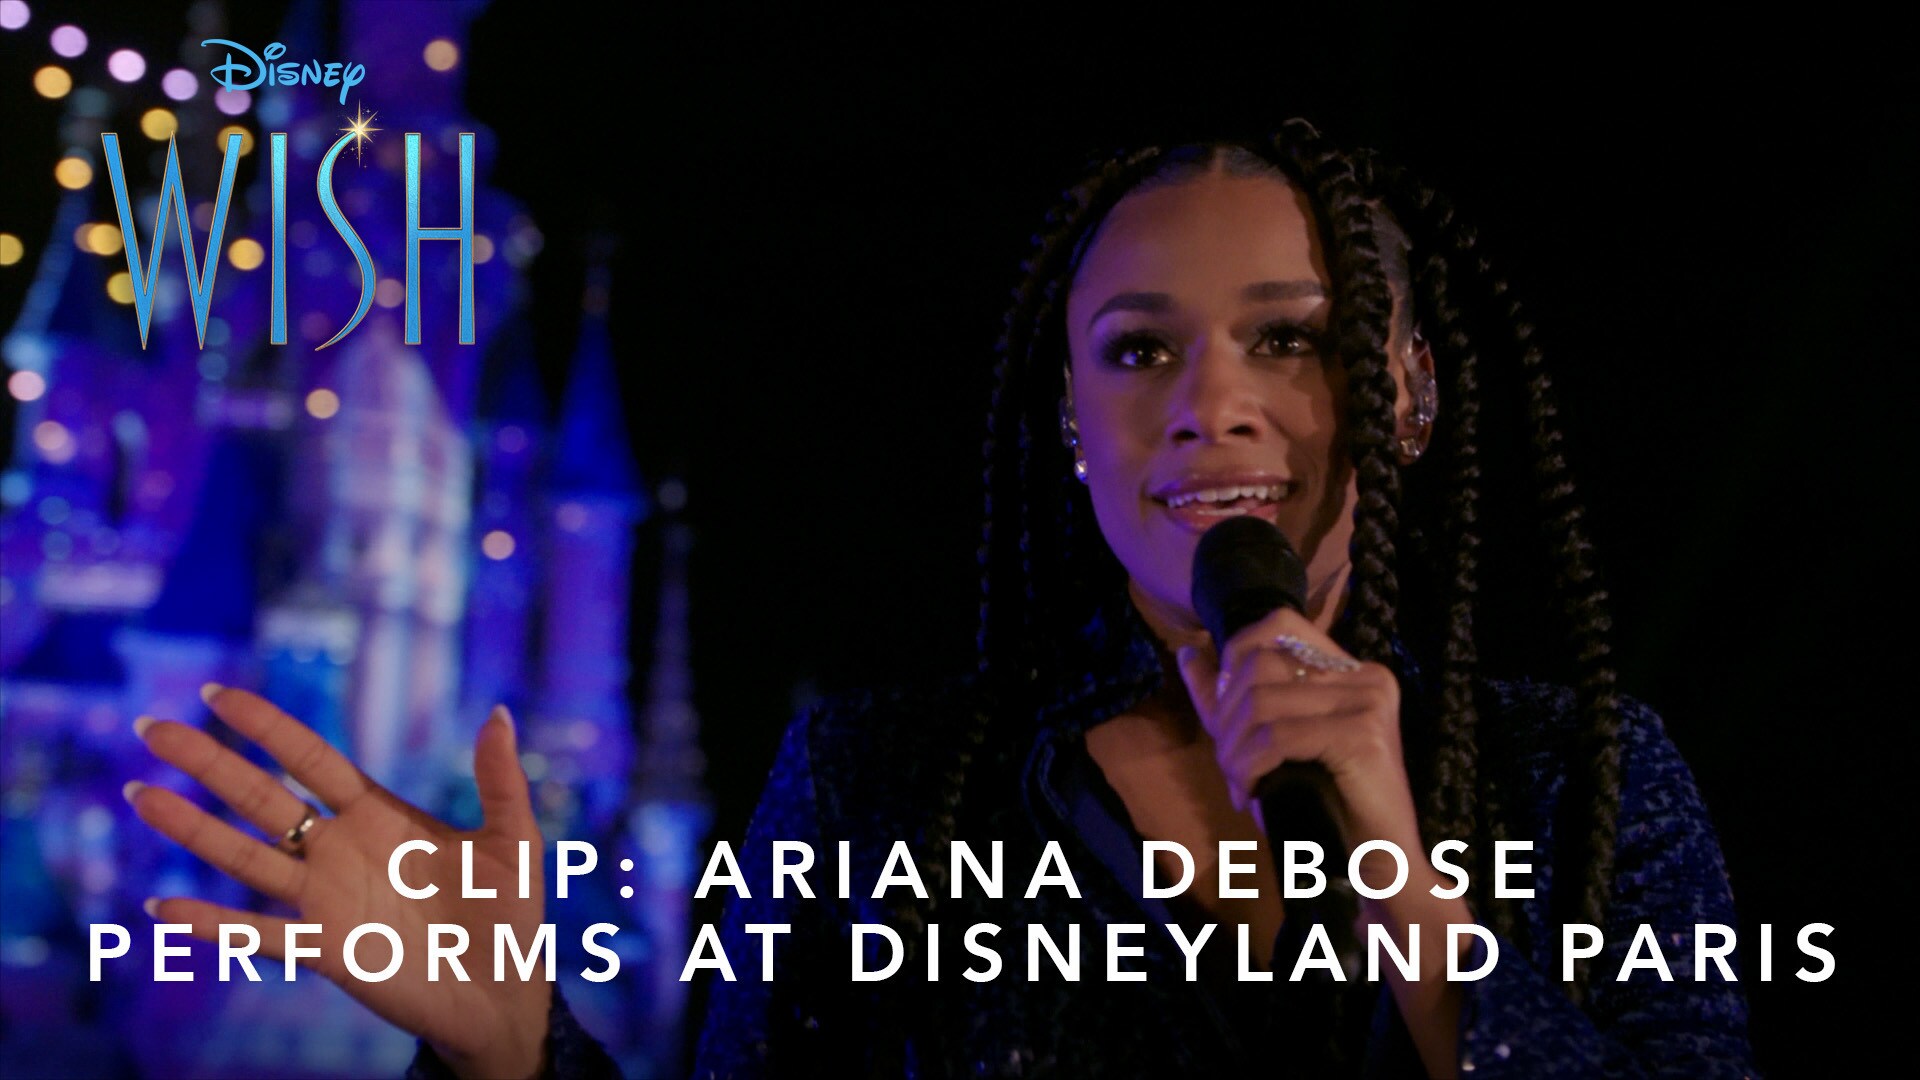 Disney's 'Wish' Trailer: Ariana DeBose Sings in Musical